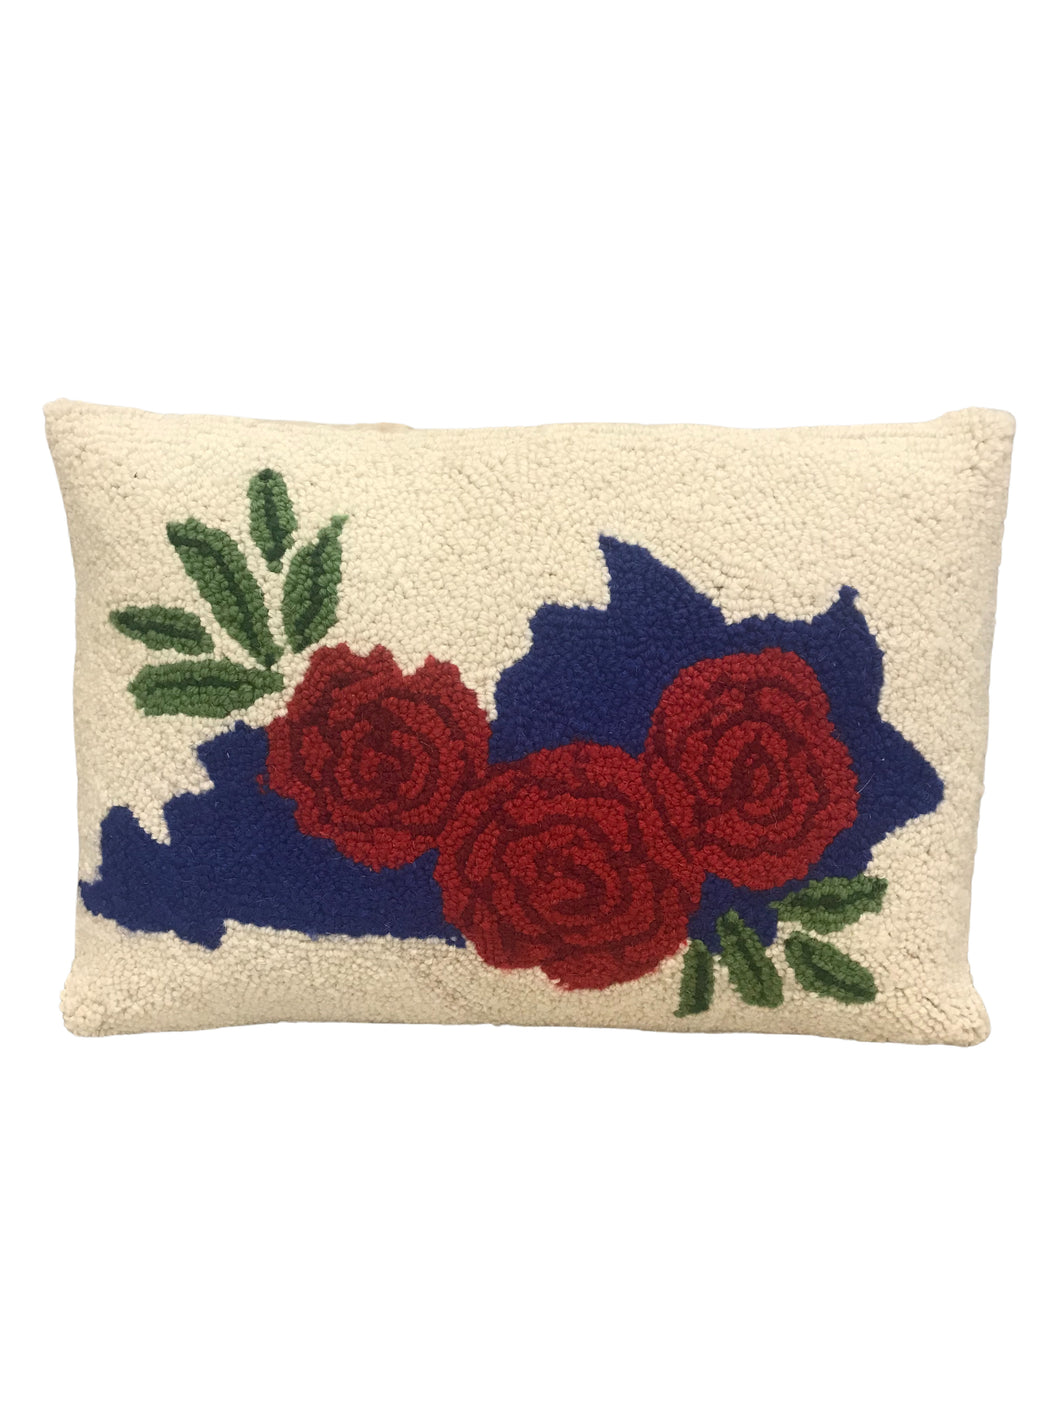 Kentucky Roses Hooked Pillow, 12x18